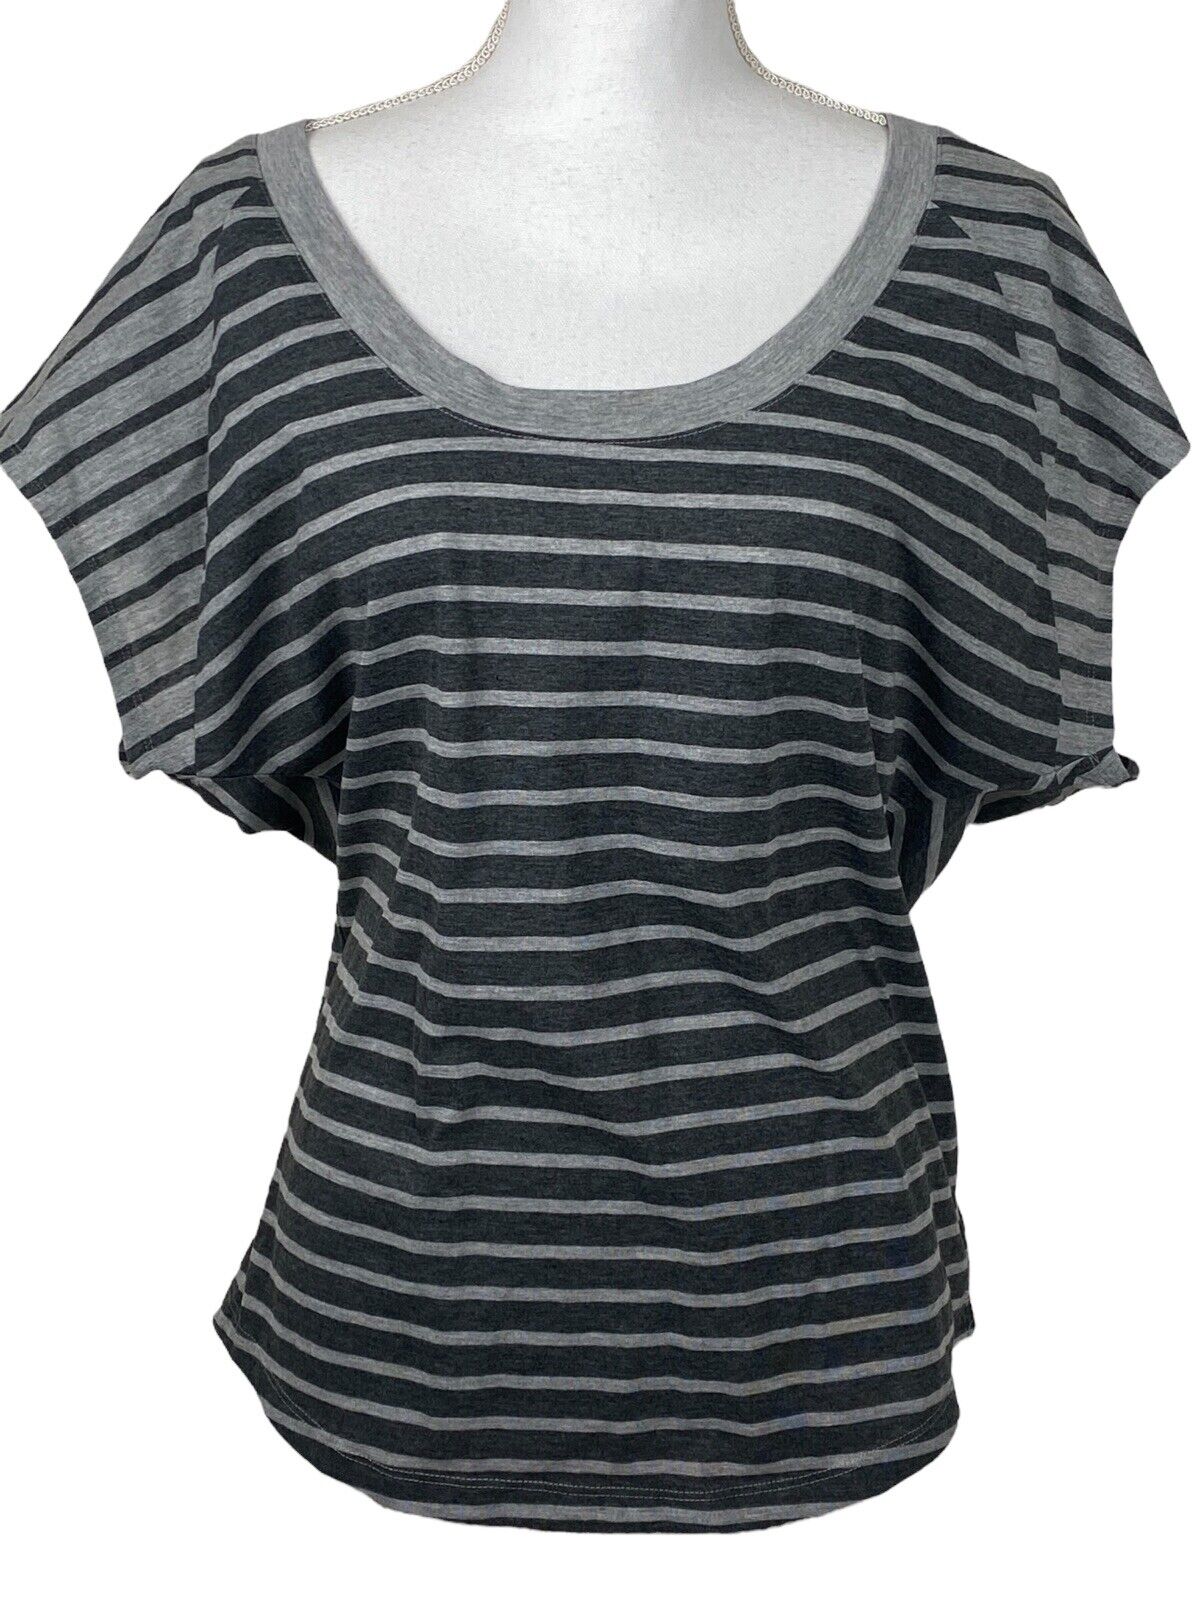 Jessica Simpson L Gray Striped Cap Sleeve scoop neck Pullover Top | eBay